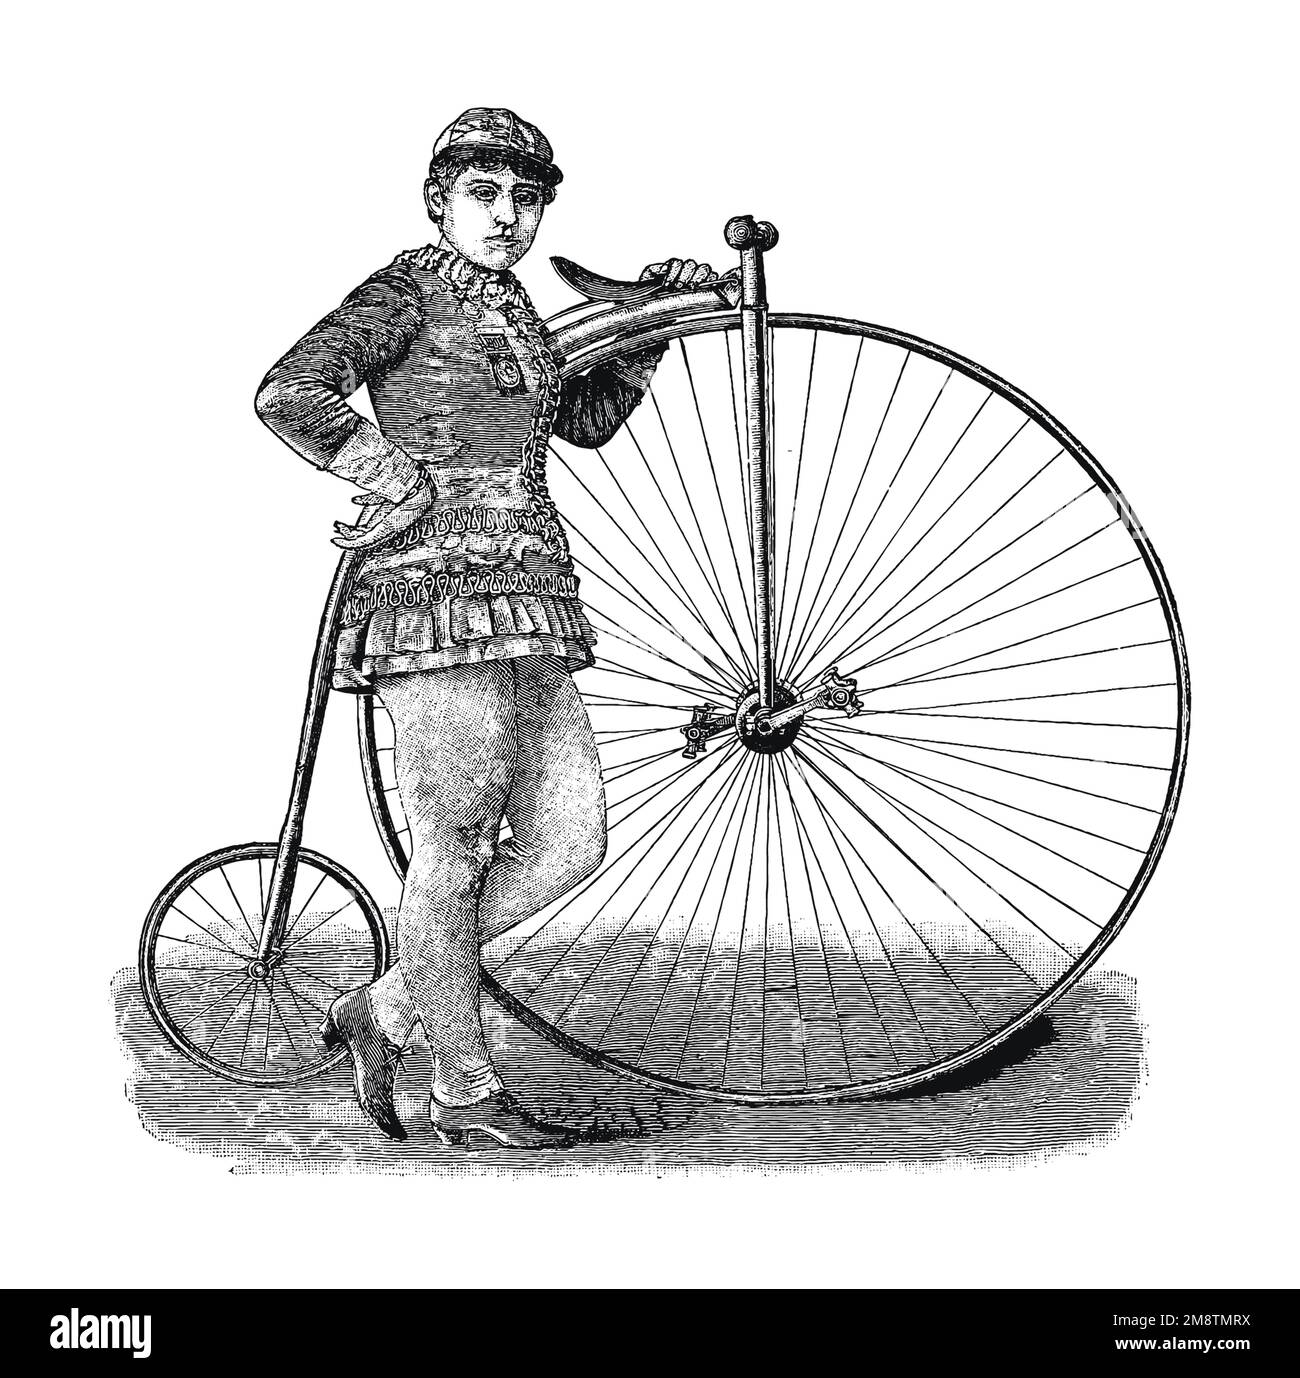 Vintage bicycle illustration, XIX-century engraving Stock Photo